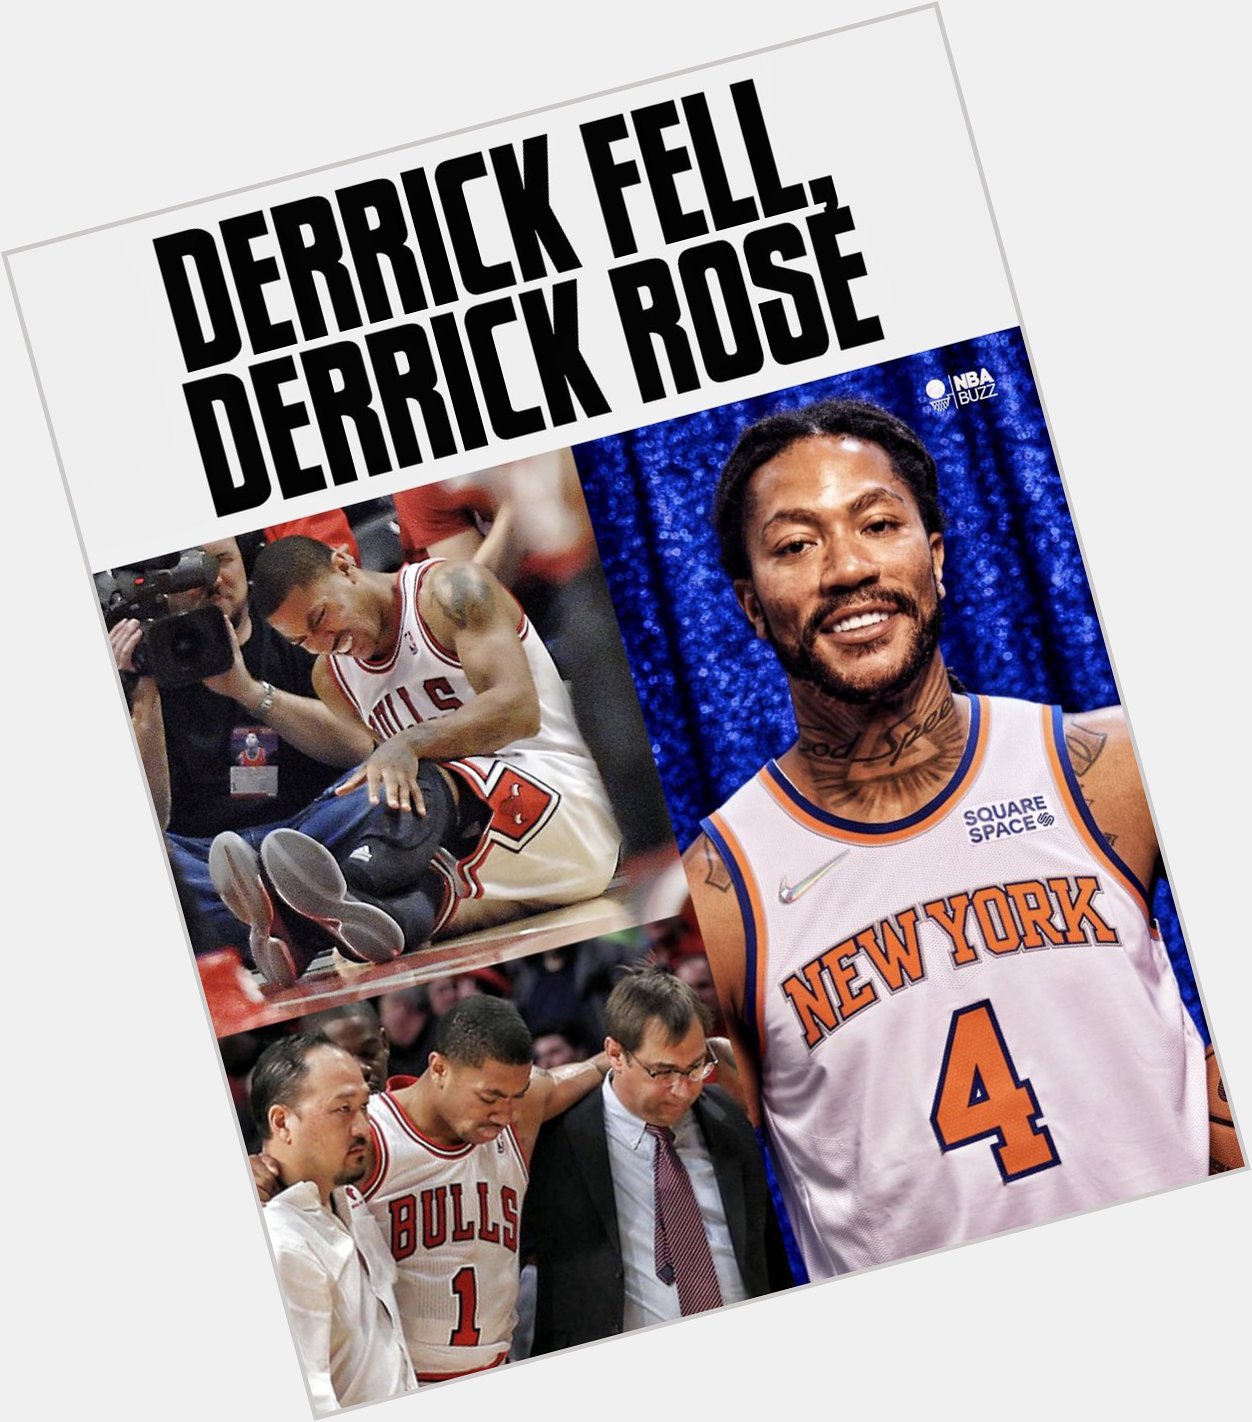 Happy 33rd birthday to NBA legend, Derrick Rose! 

Derrick Fell, Derrick ROSE   